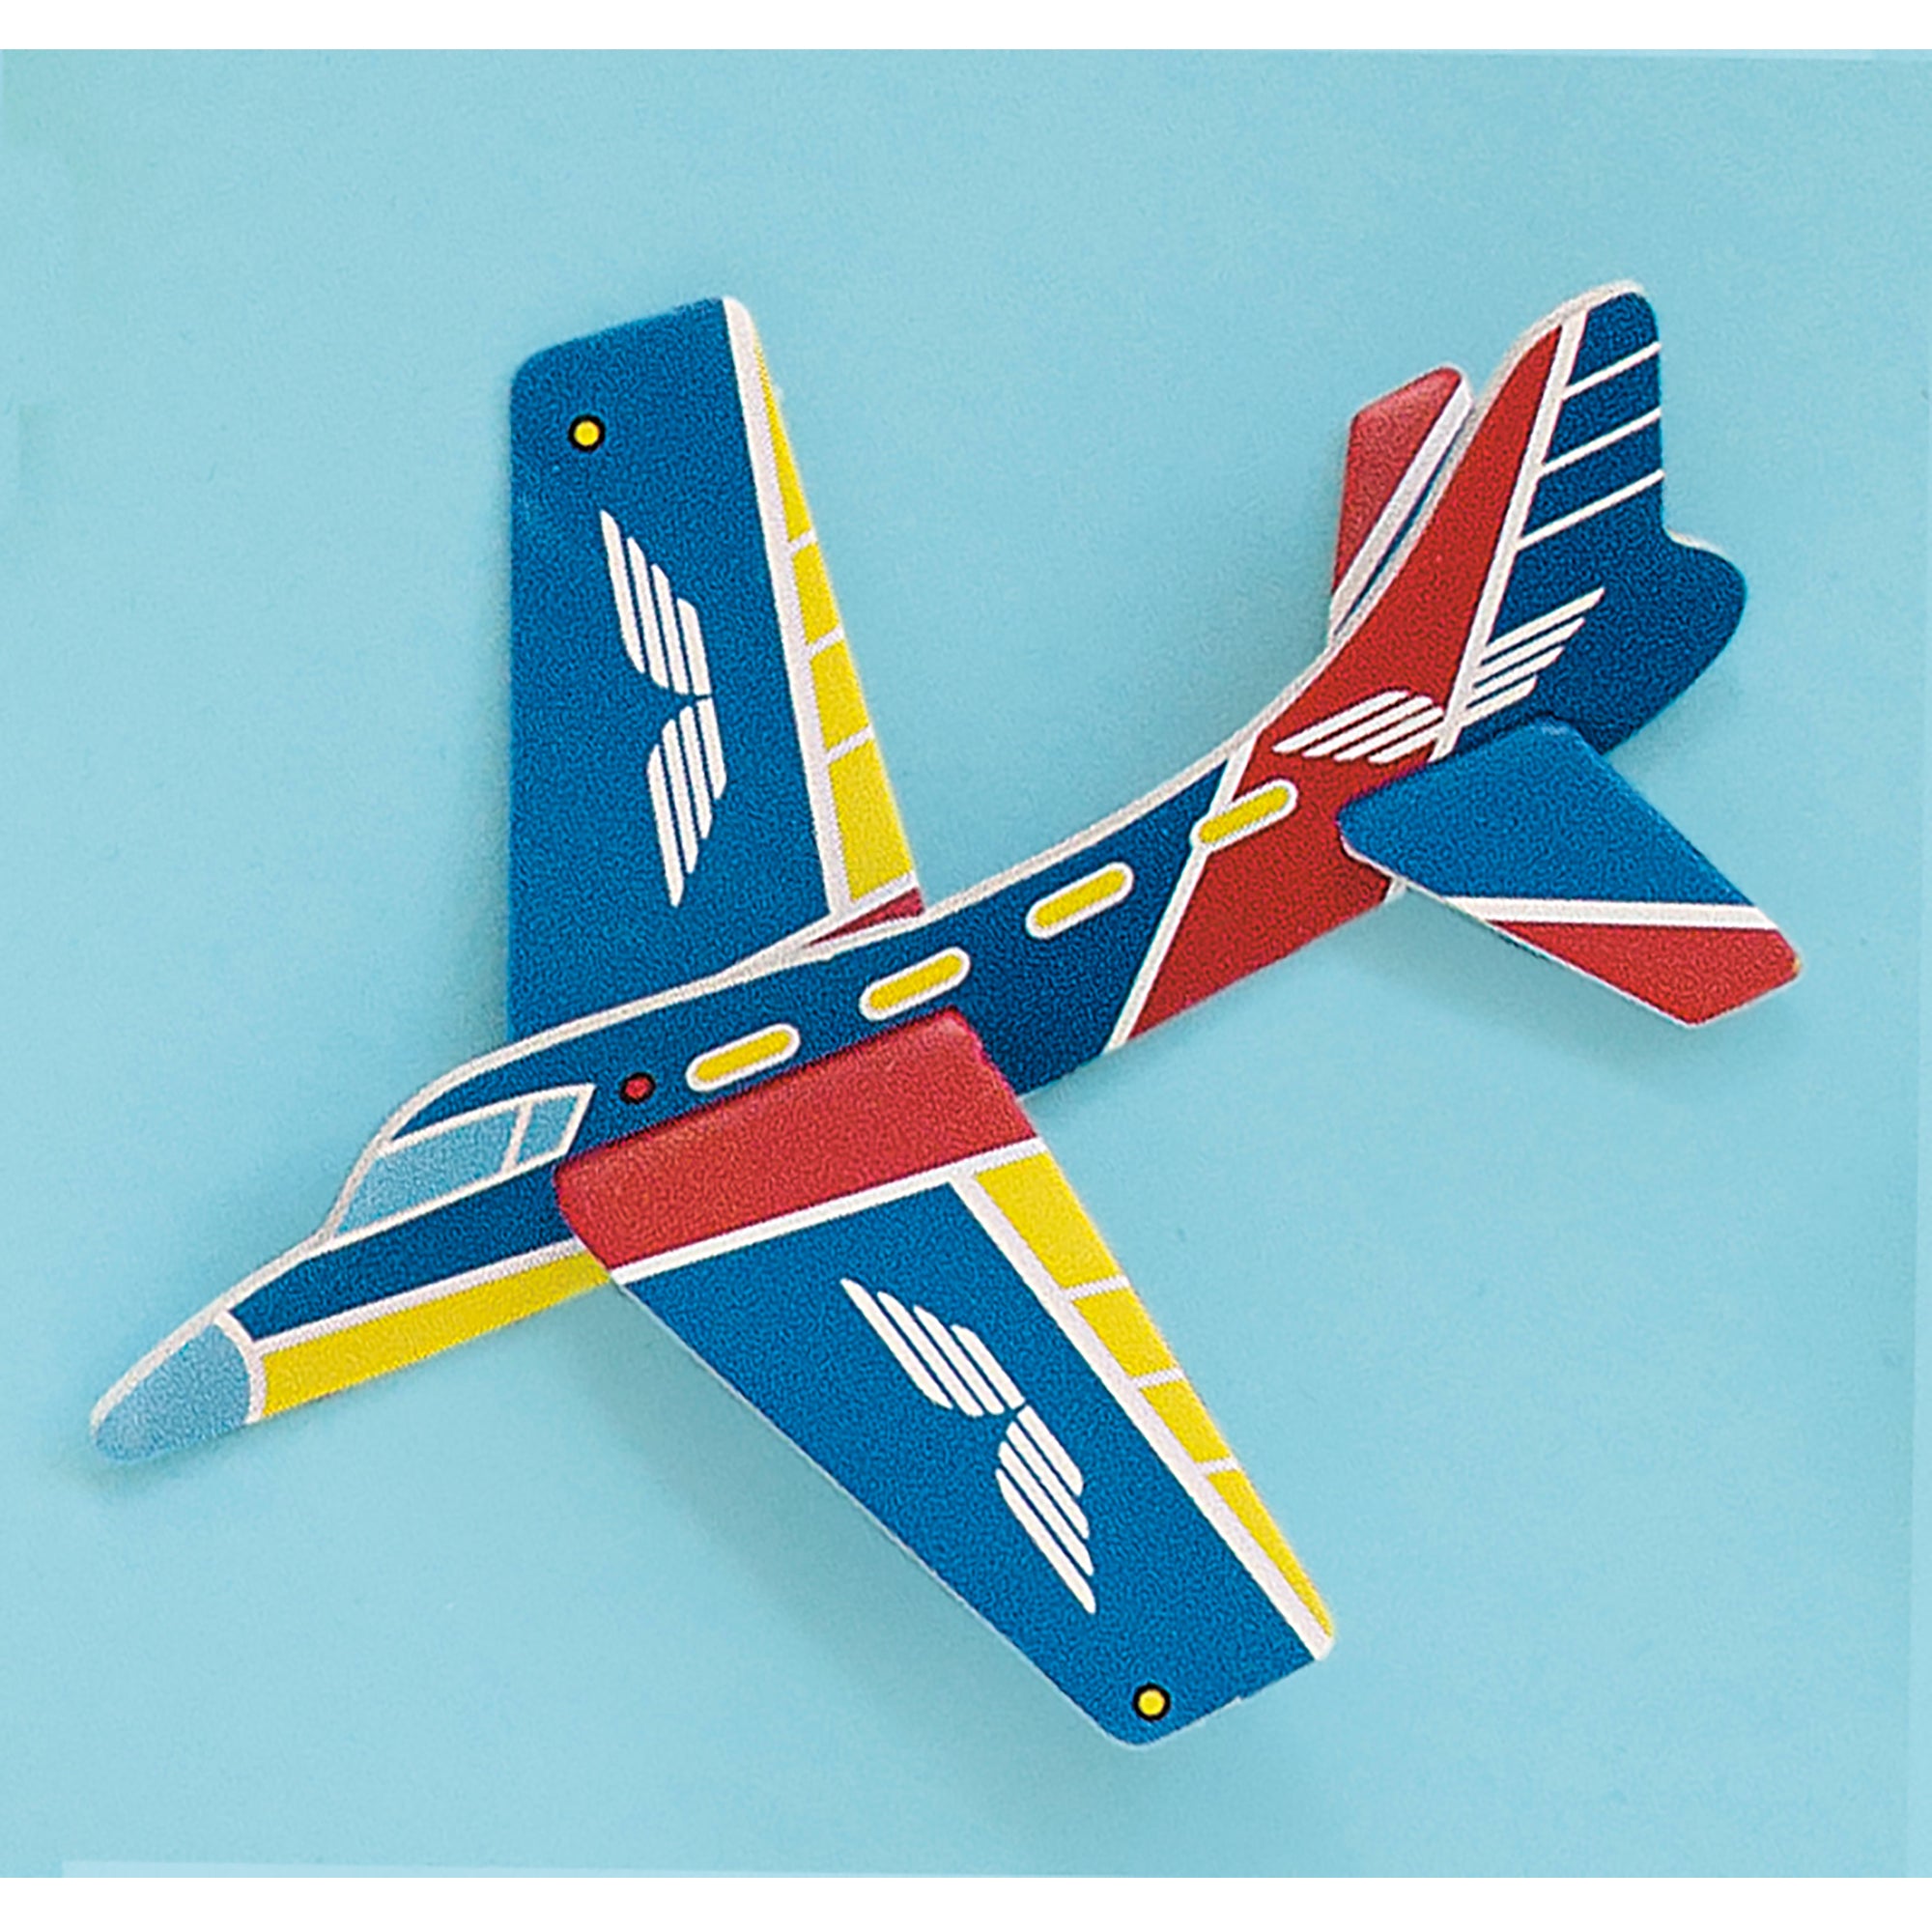 8 Airplane Glider Kits 5x4.25in